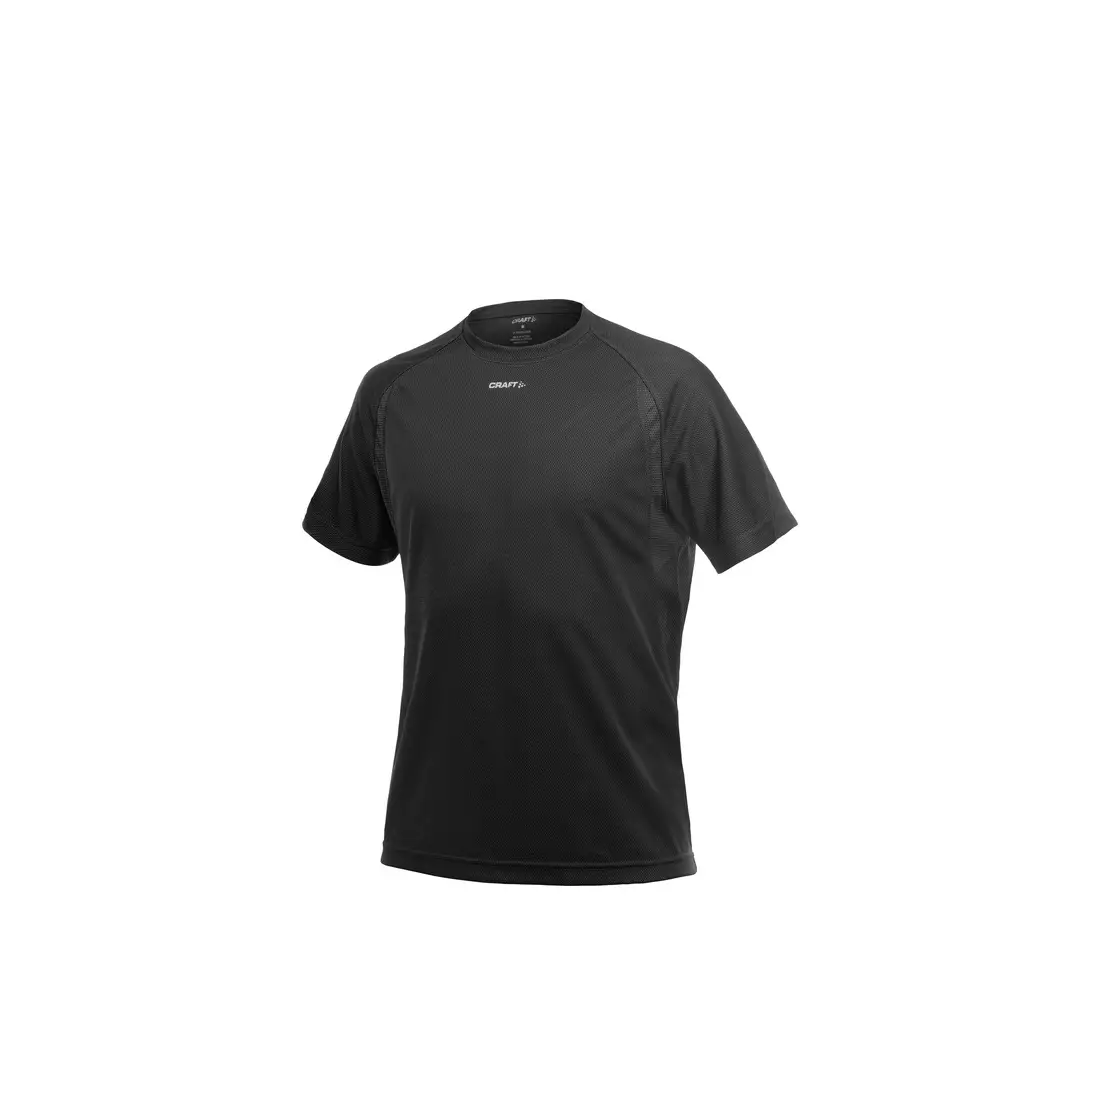 CRAFT ACTIVE RUN 1900655-9999 - men's running T-shirt